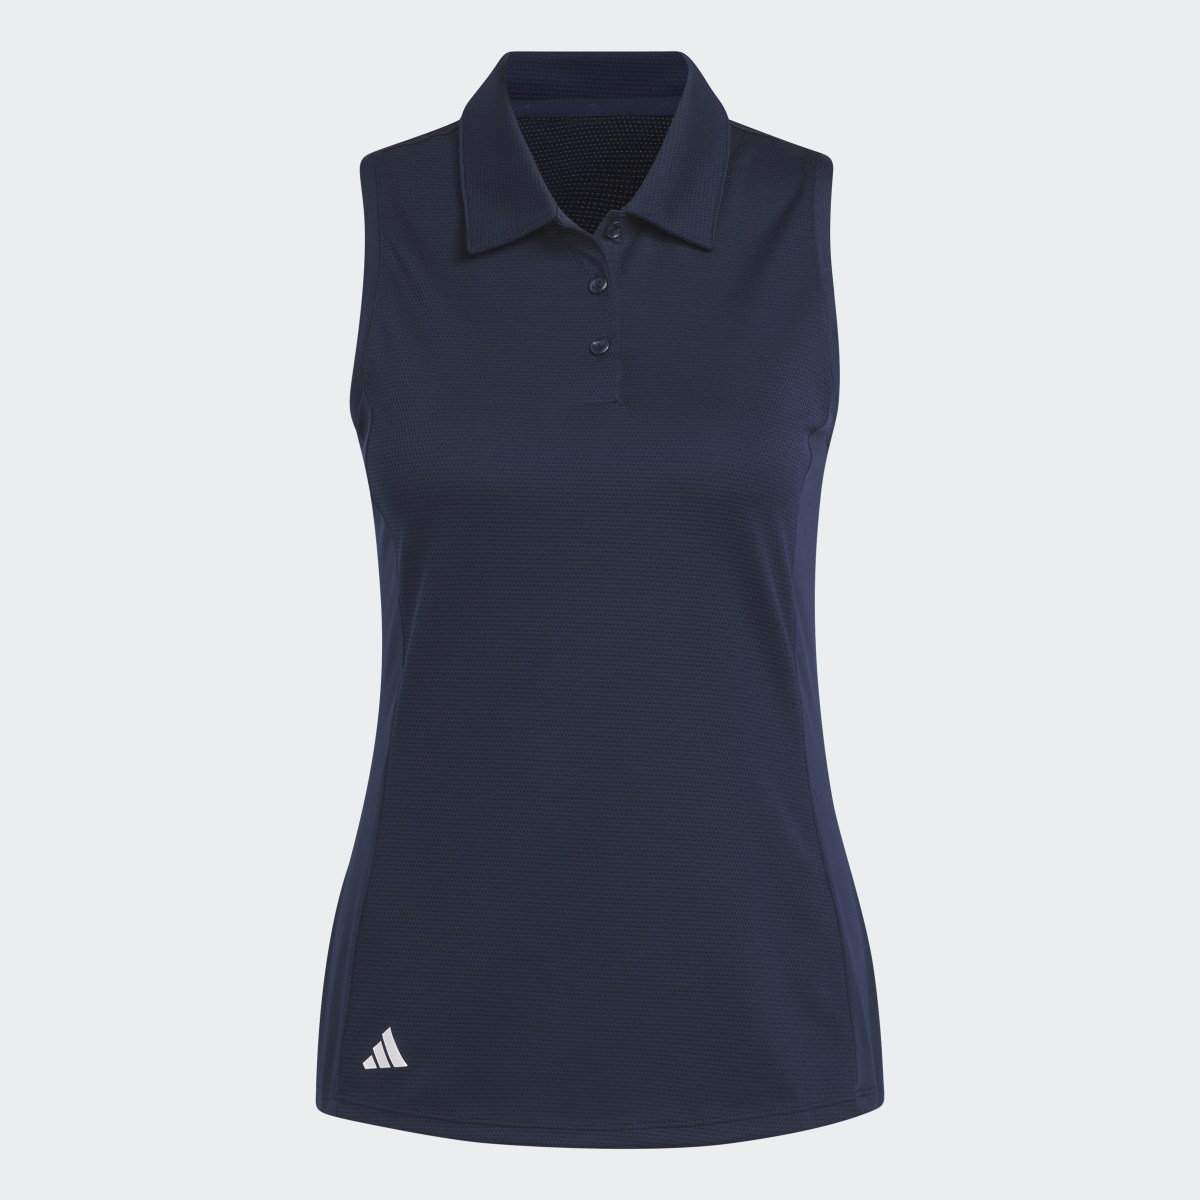 Adidas Texture Sleeveless Golf Polo Shirt. 5